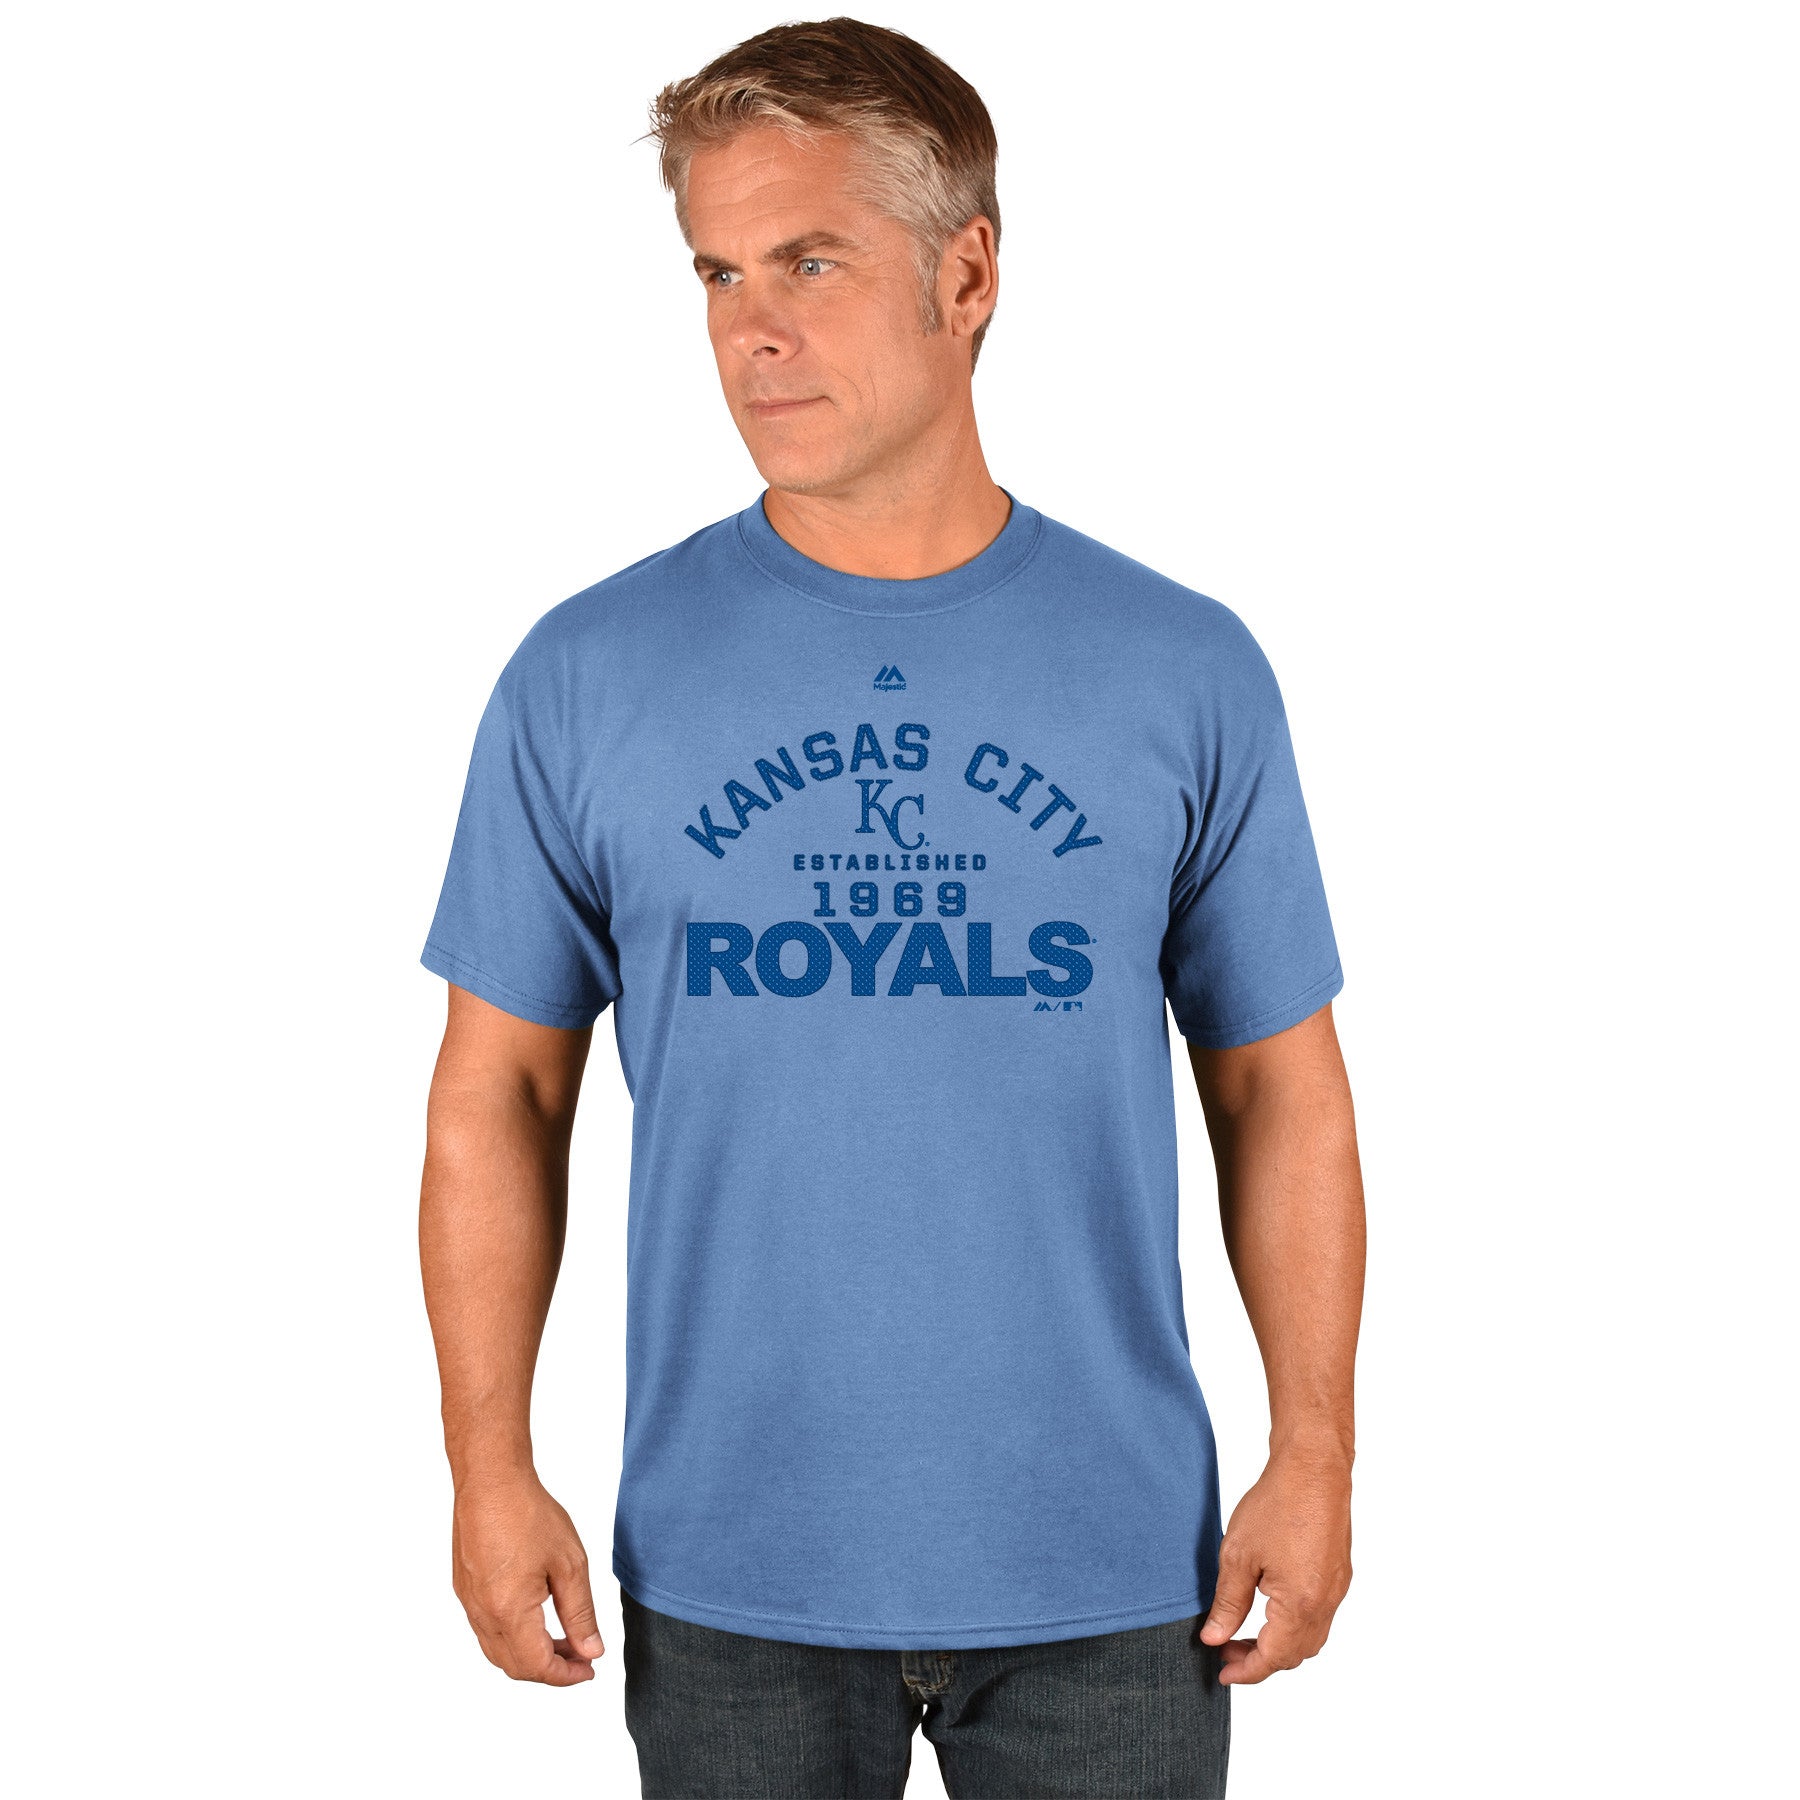 Kansas City Royals Apparel, Officially Licensed